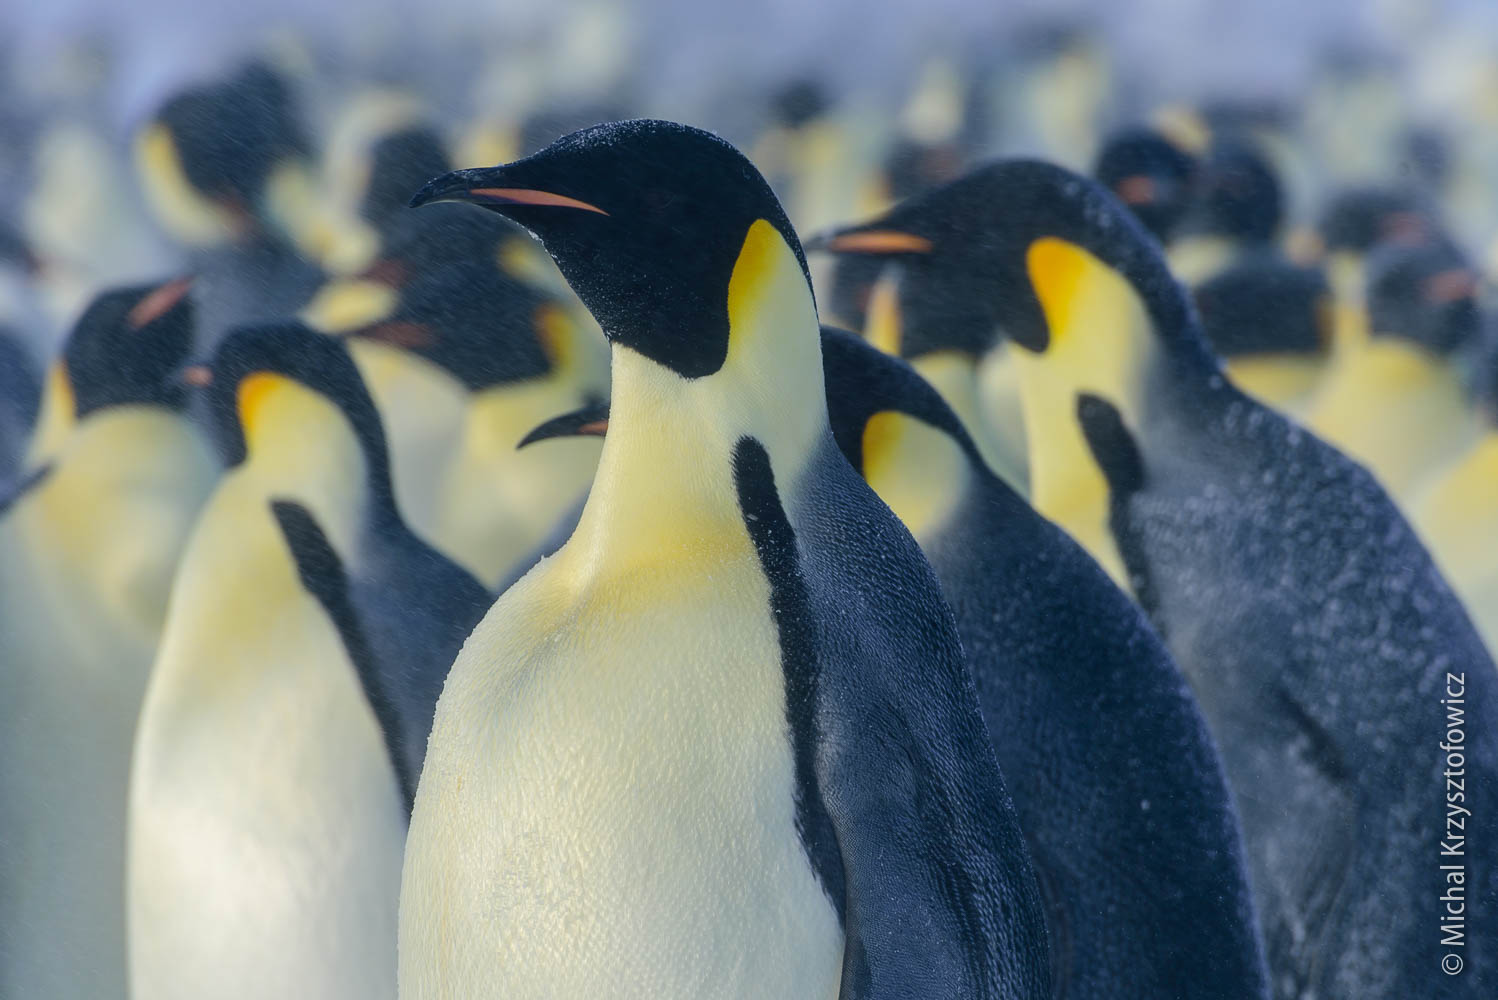 More Emperor Penguins